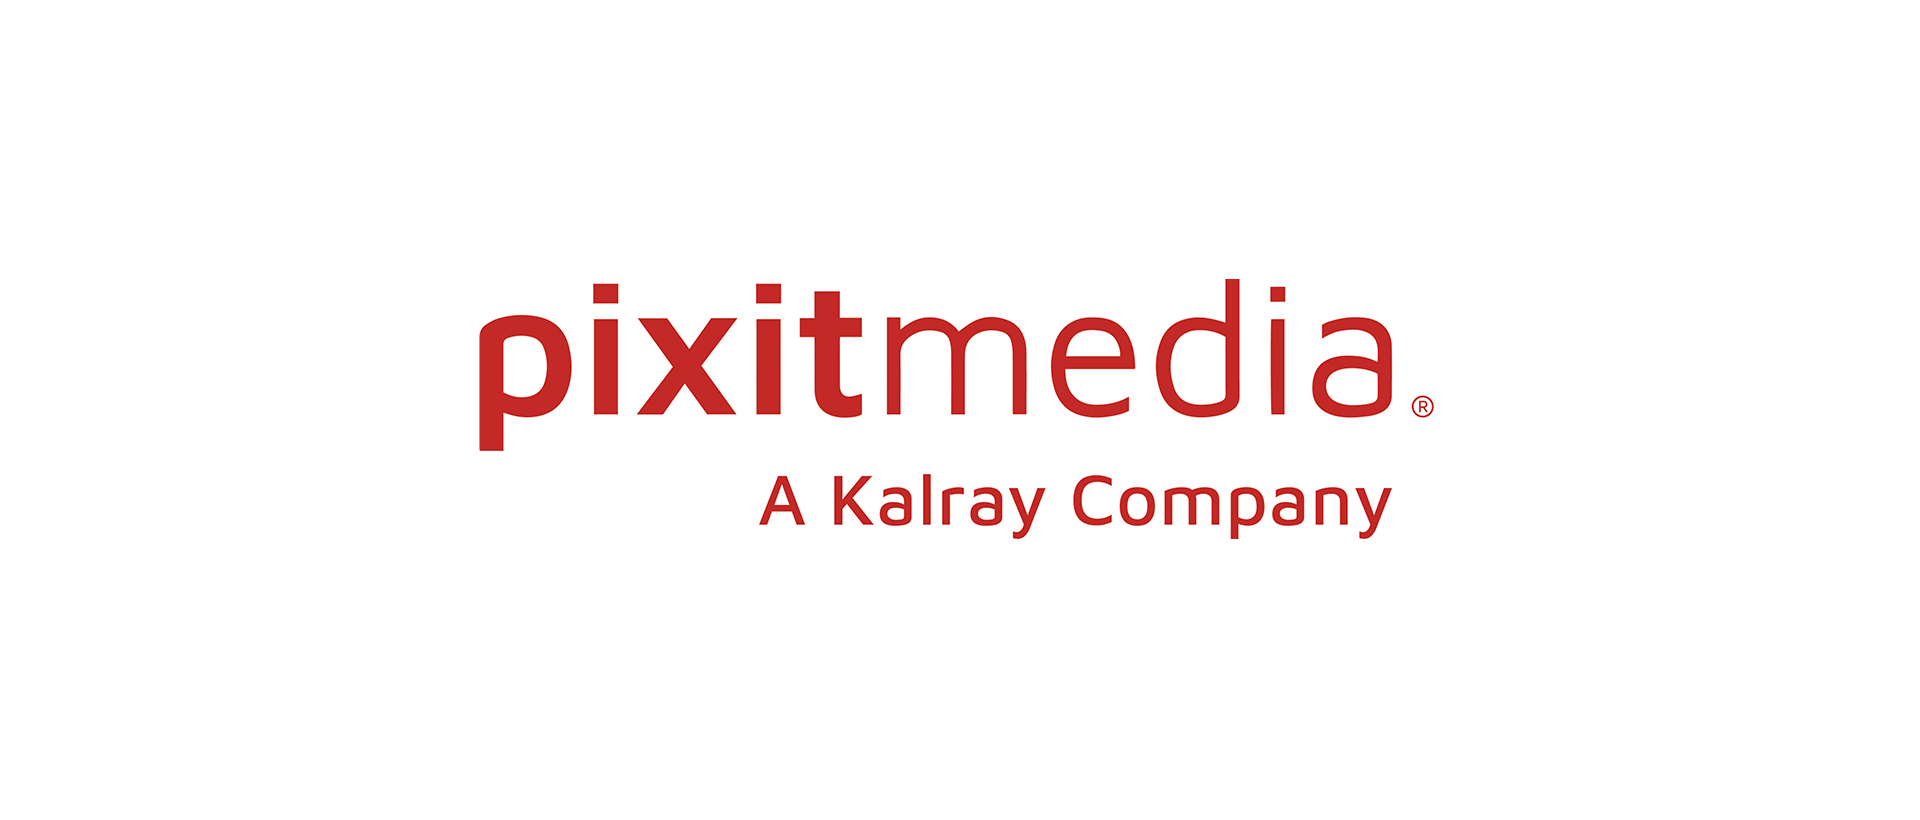 pixitmedia new logo 30af5